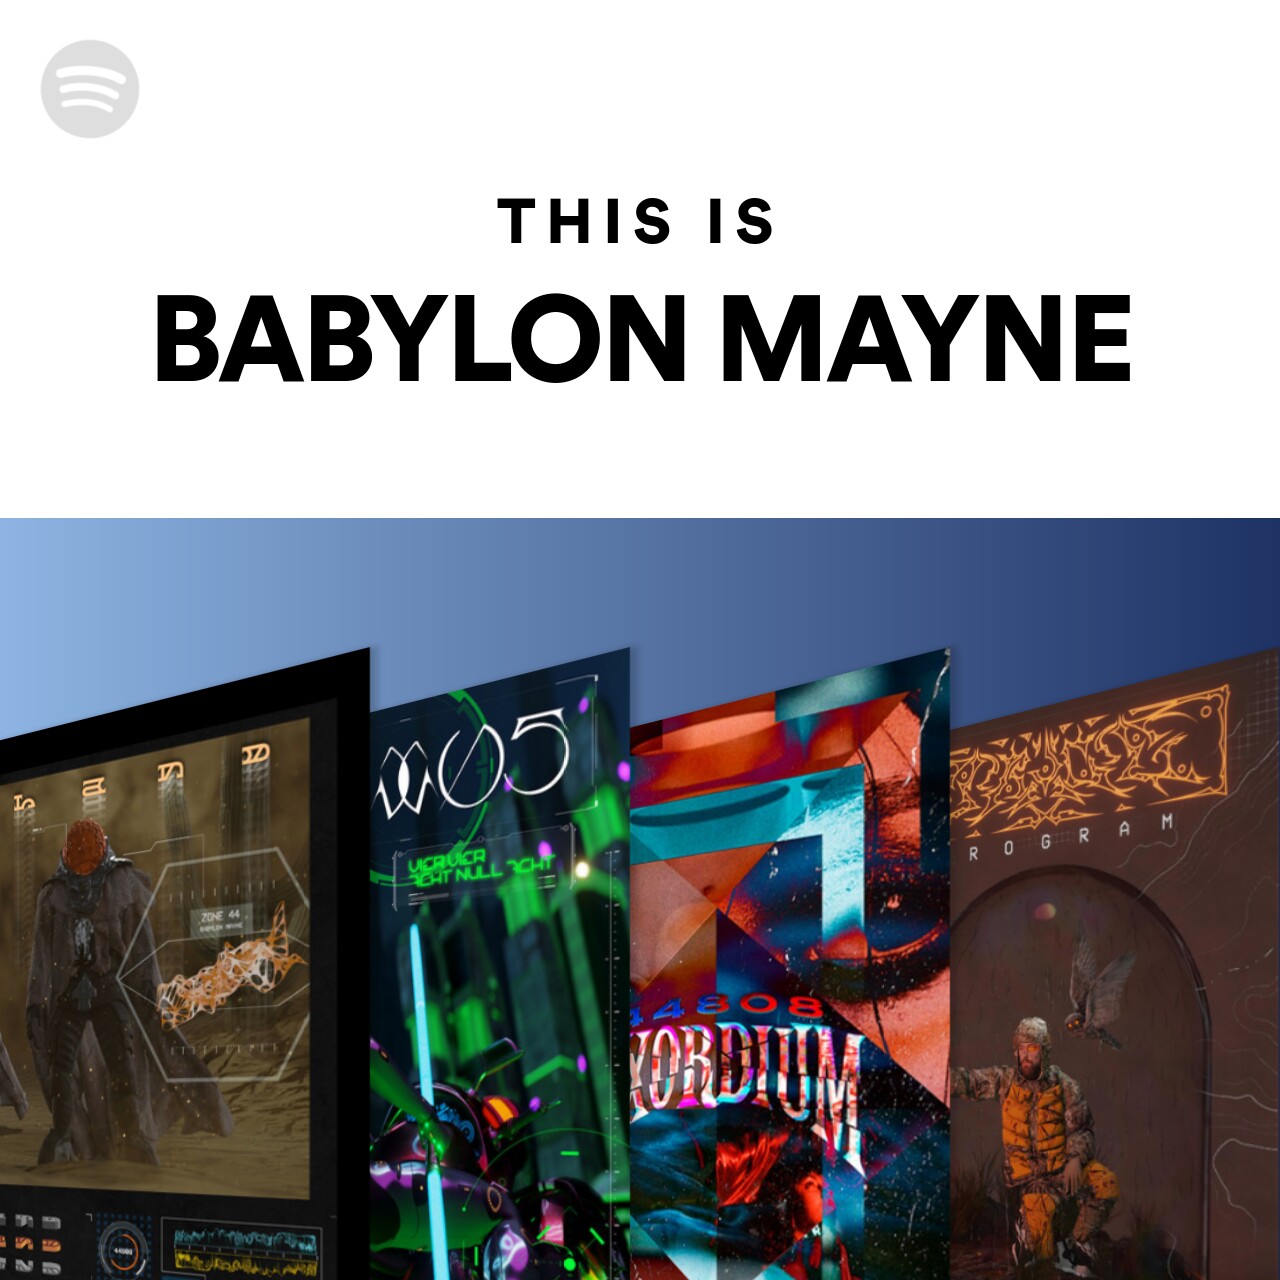 This Is BABYLON MAYNE